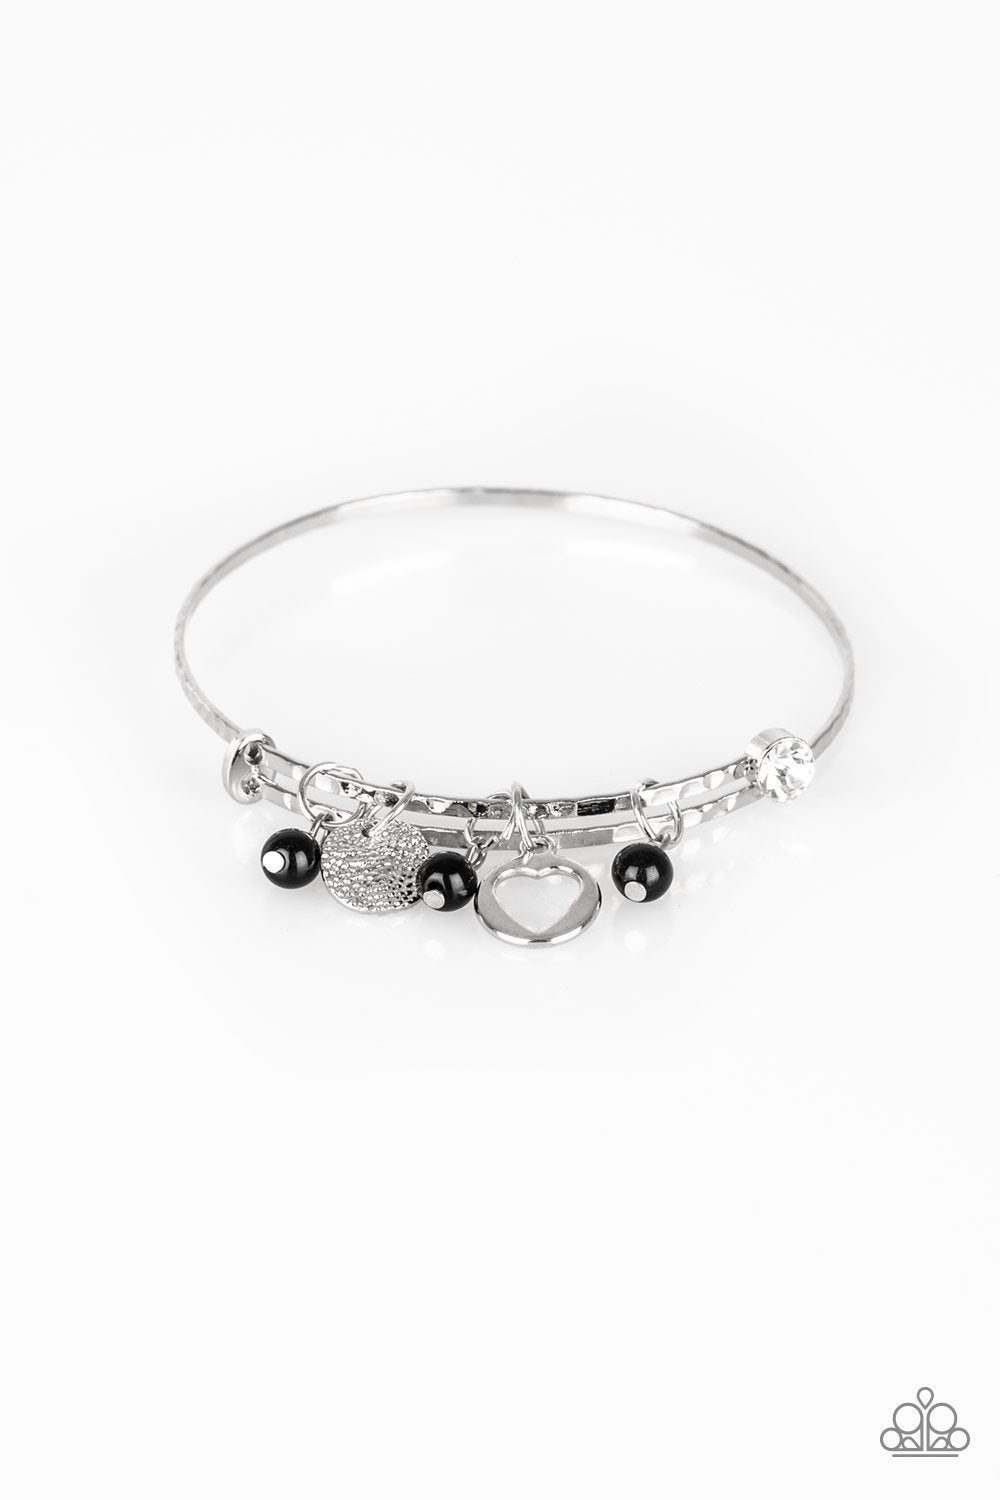 Paparazzi Truly True Love - Black beads - Silver wire coils Bracelet - Heart charm - $5 Jewelry with Ashley Swint